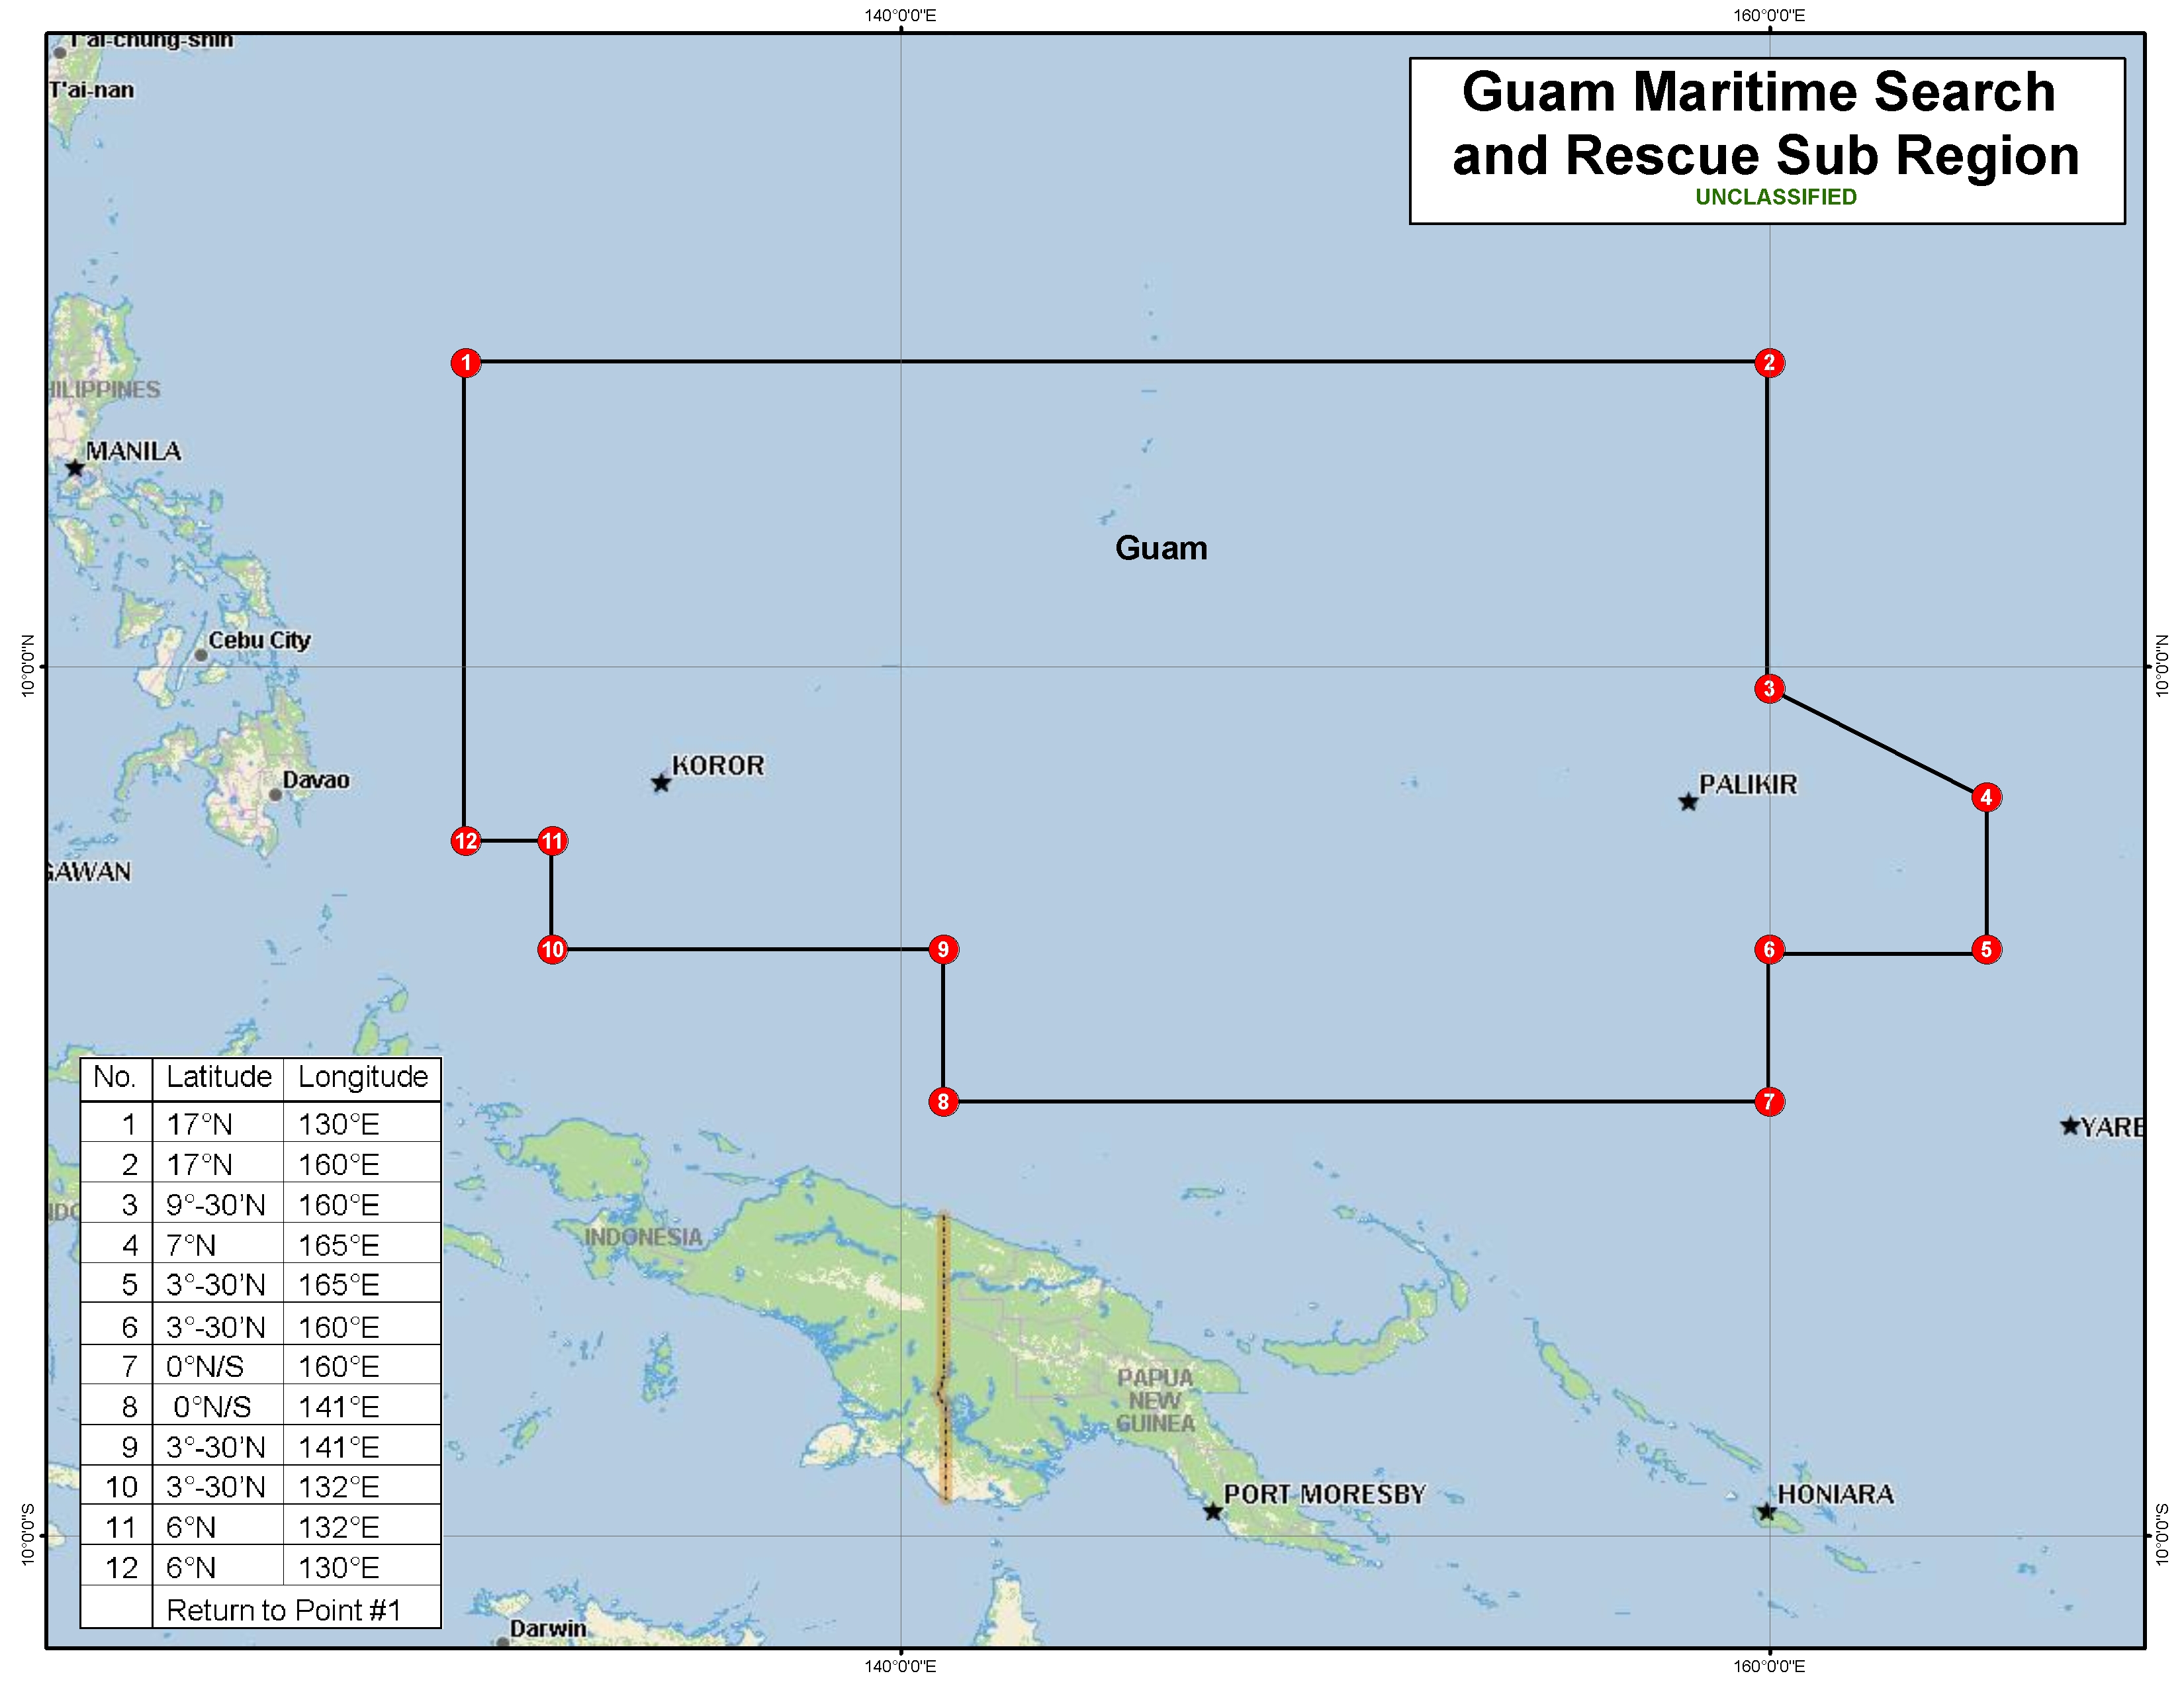 Guam SRR Maritime